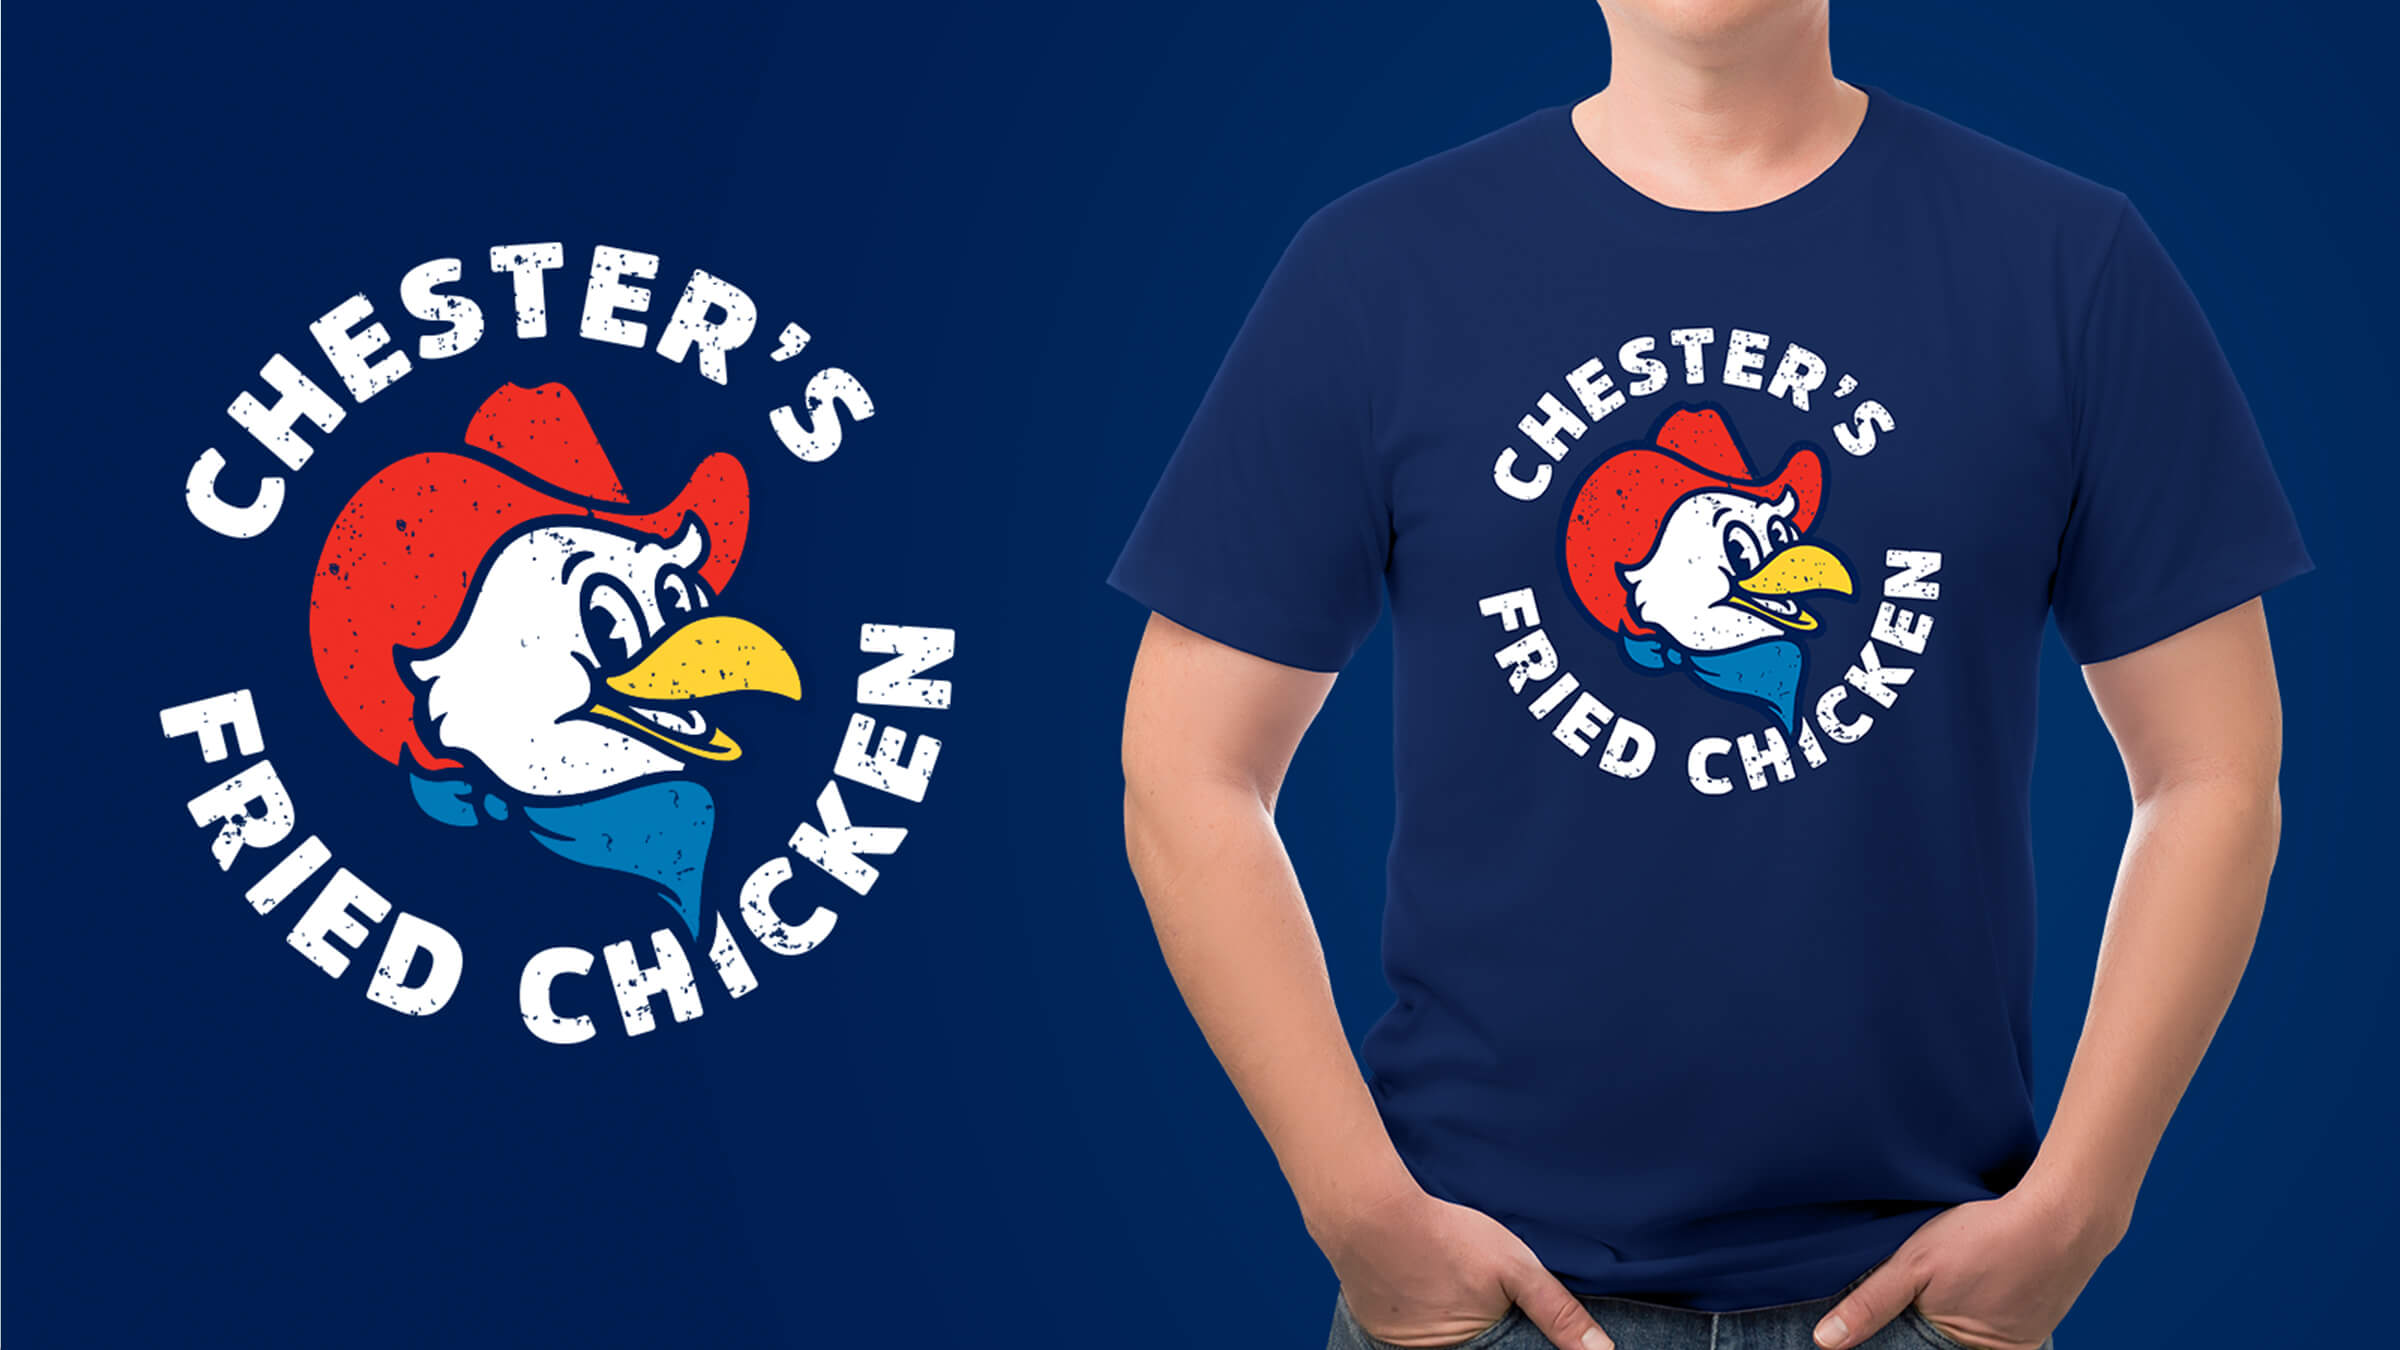 Chester's Fried Chicken Shirt